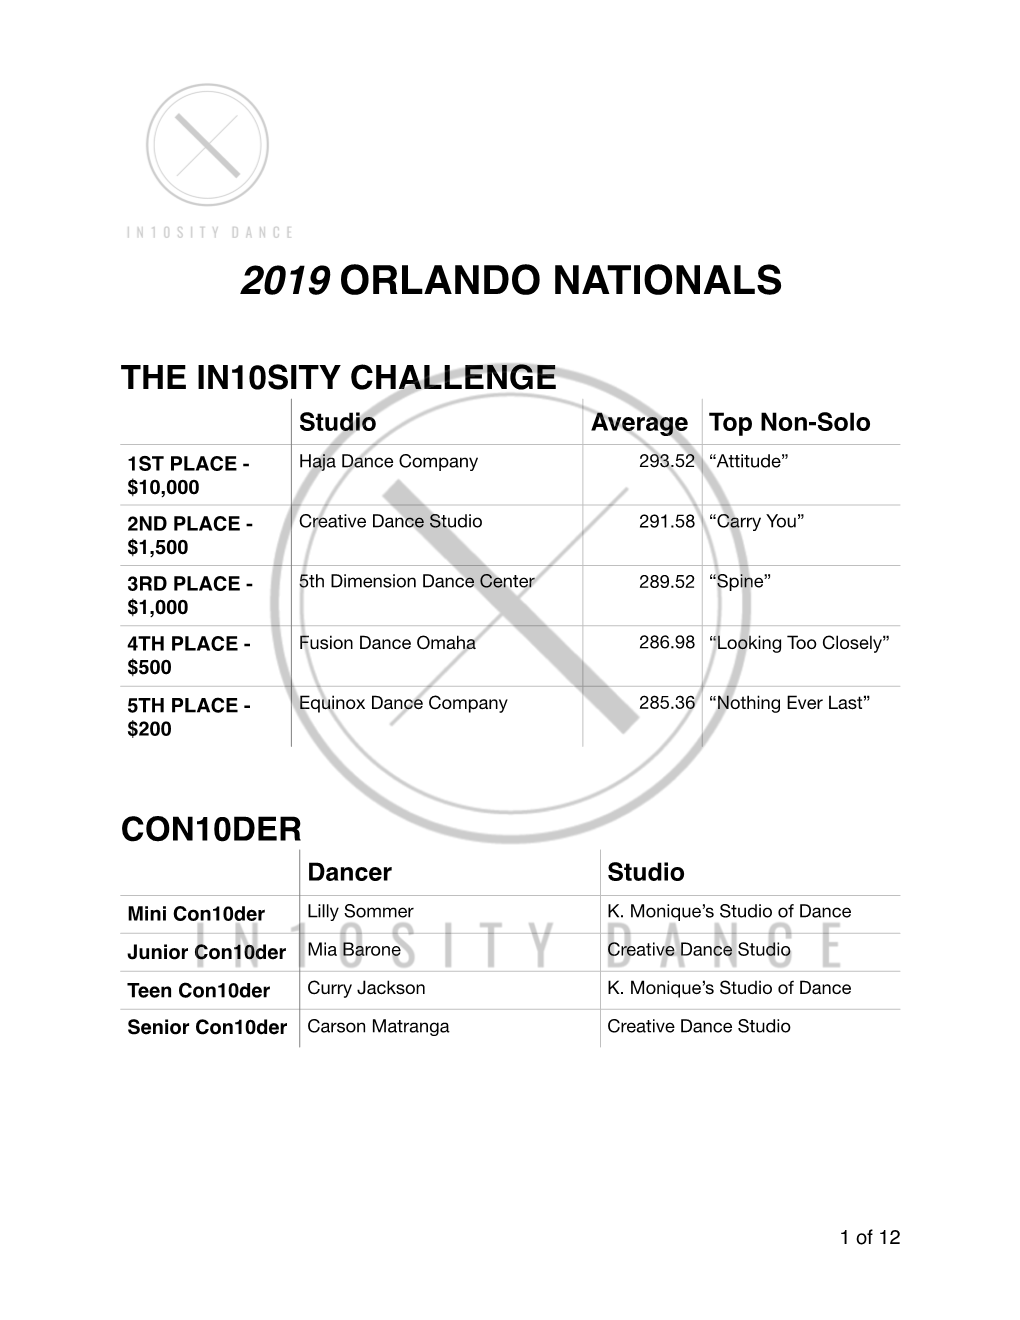 2019 Orlando Nationals Results